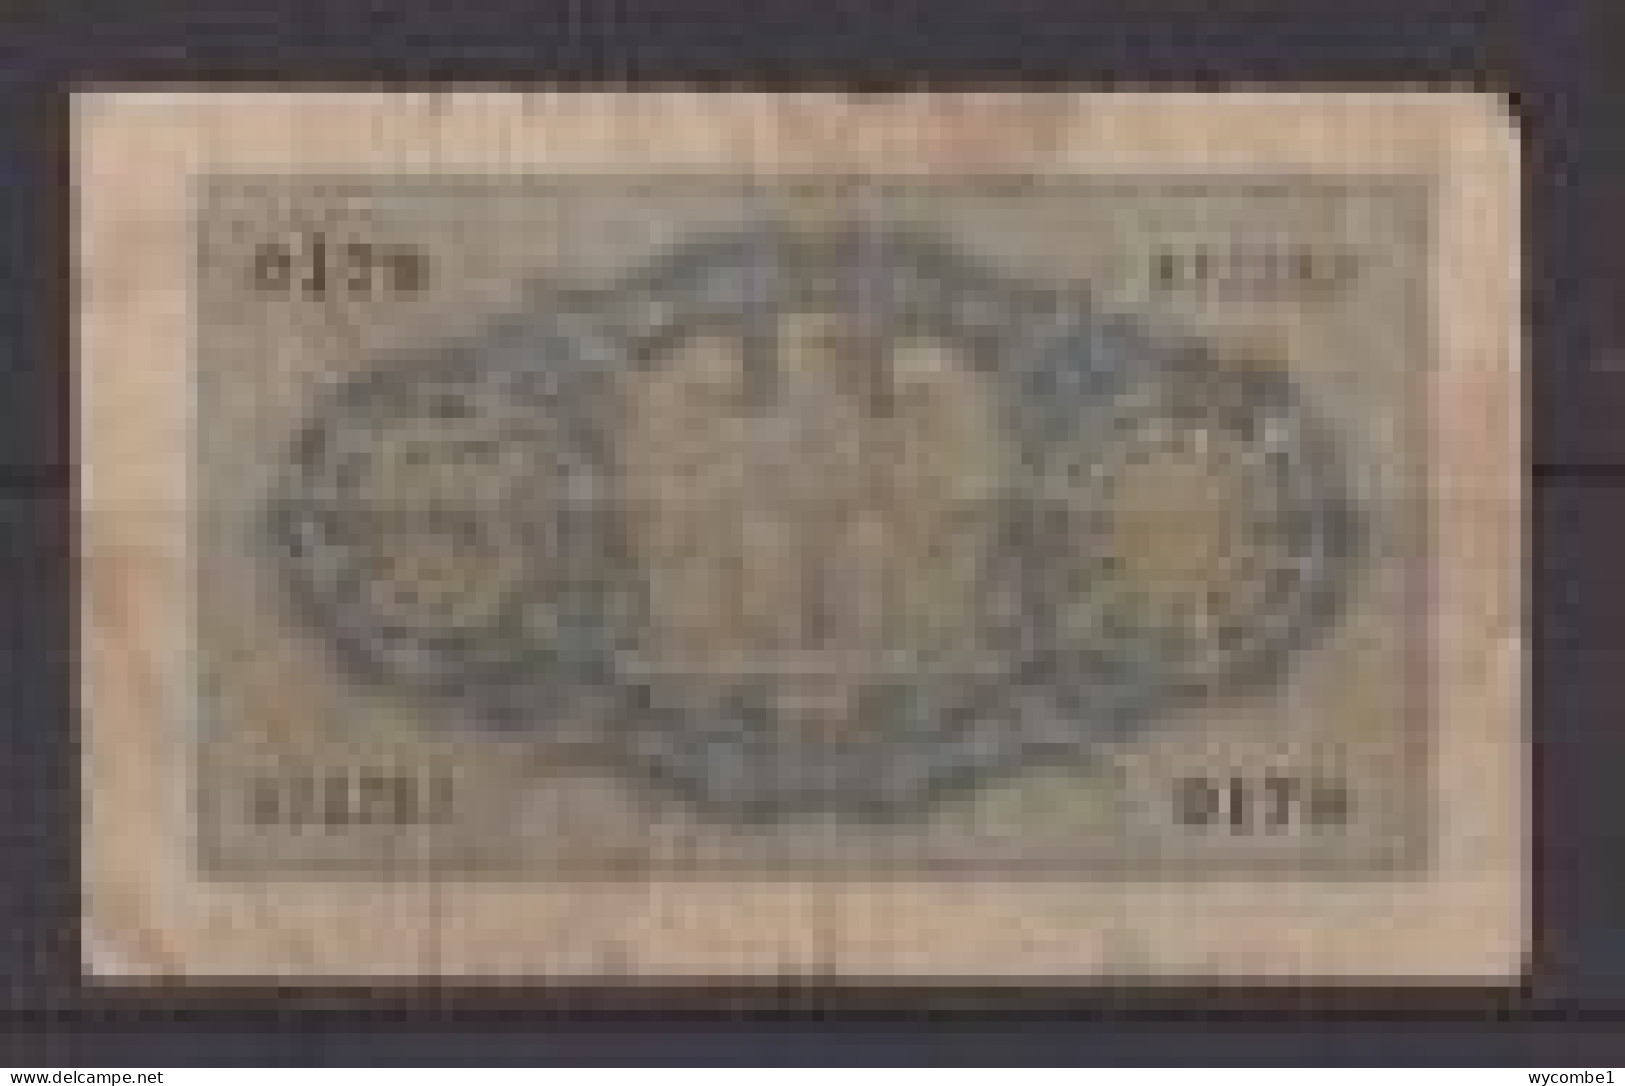 ITALY - 1940 5 Lira Circulated Banknote - Italia – 5 Lire